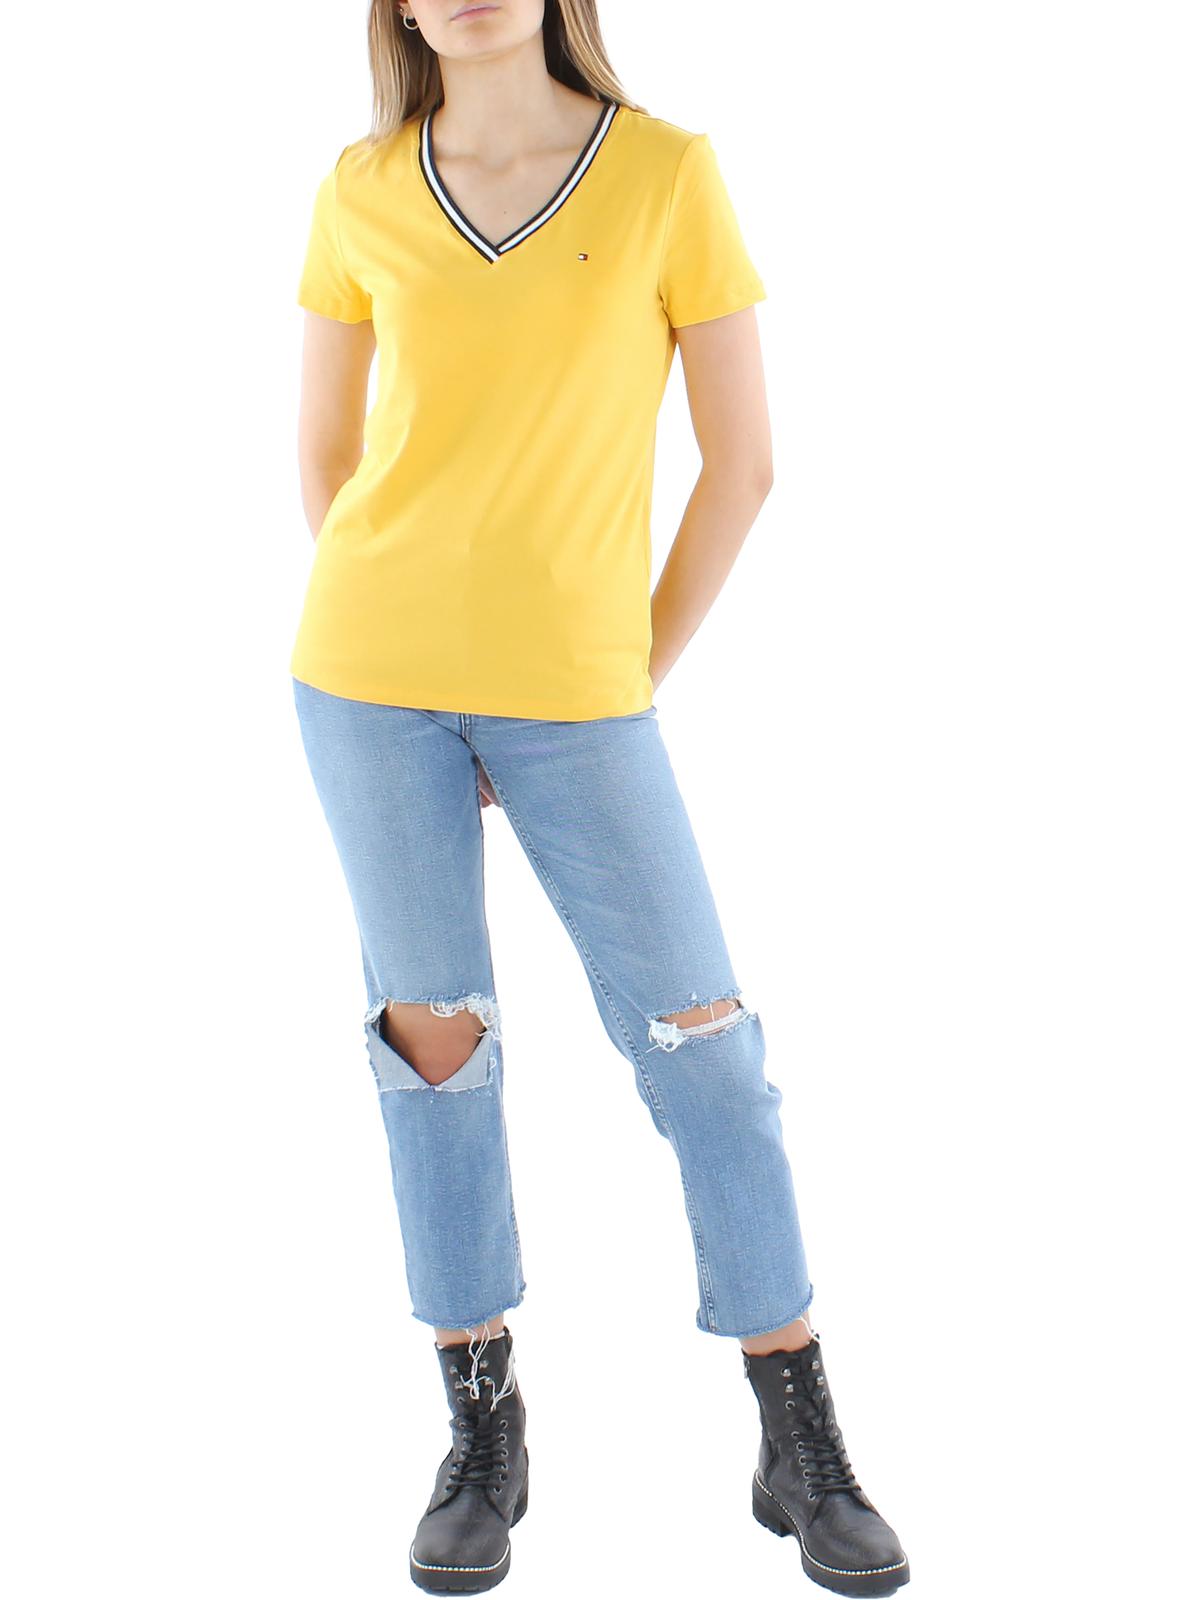 TOMMY HILFIGER Womens Contrast Trim V-Neck T-Shirt